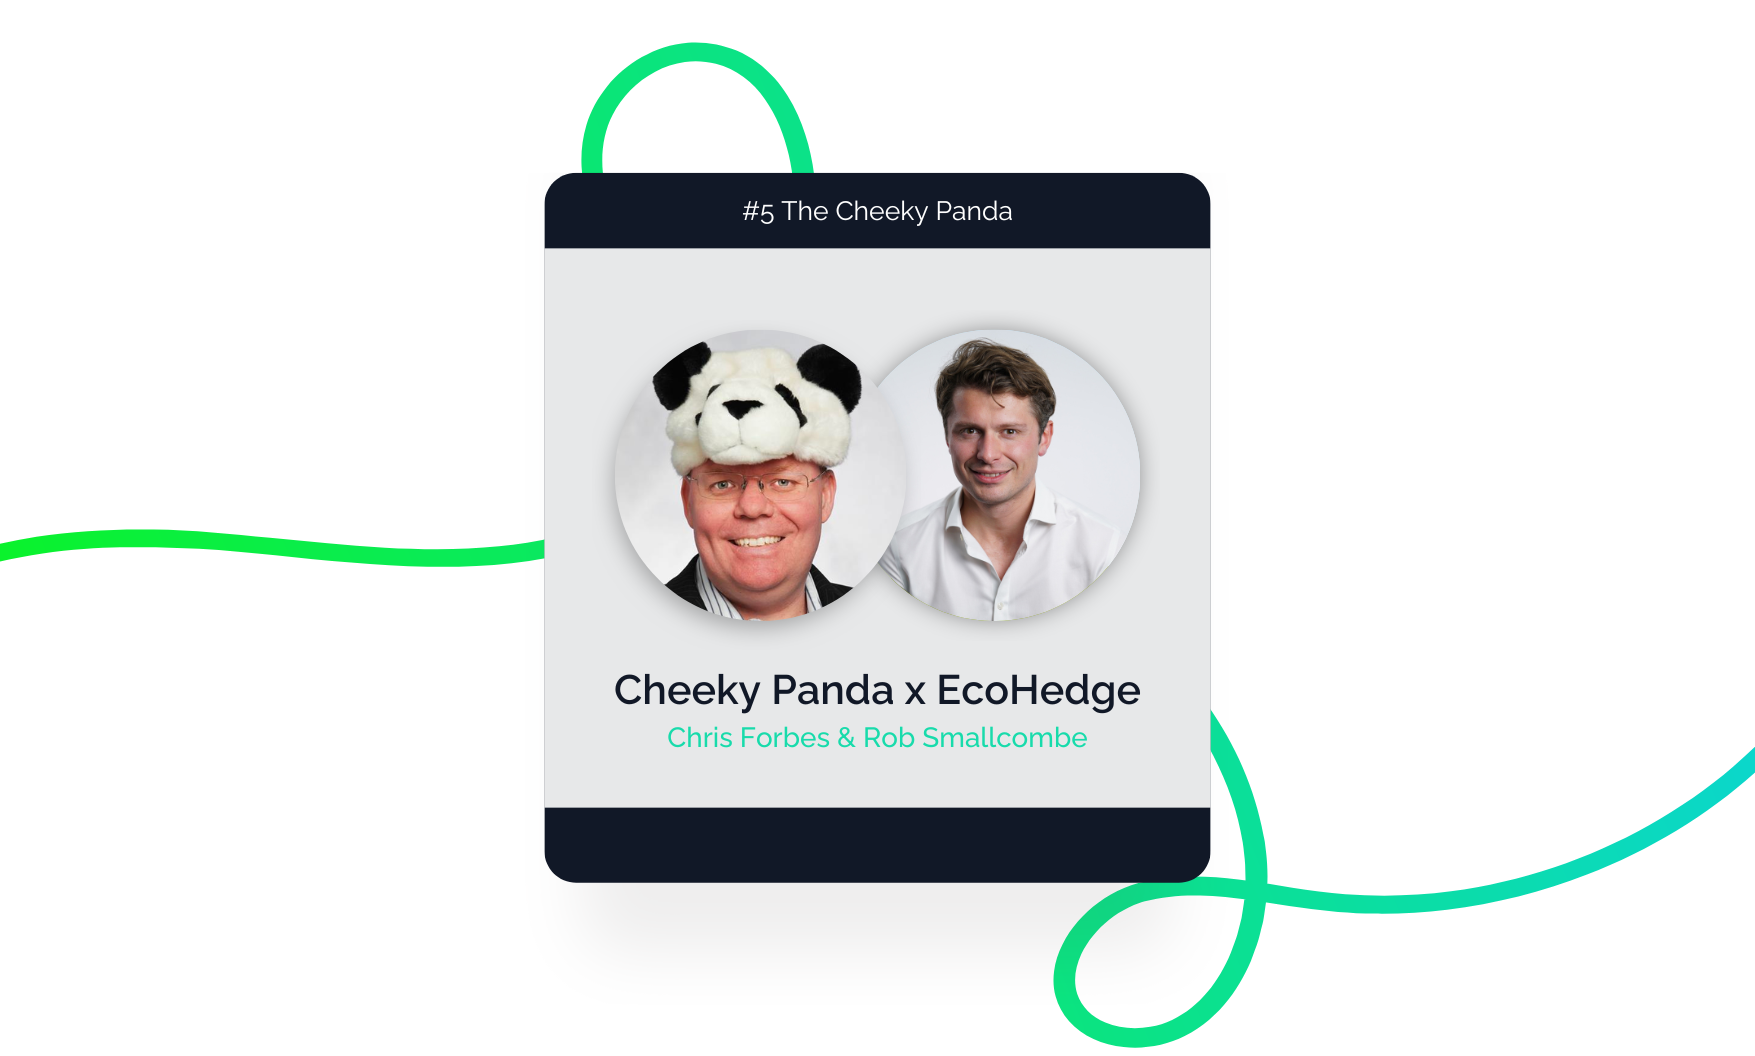 Cheeky Panda and EcoHedge - Brand Story